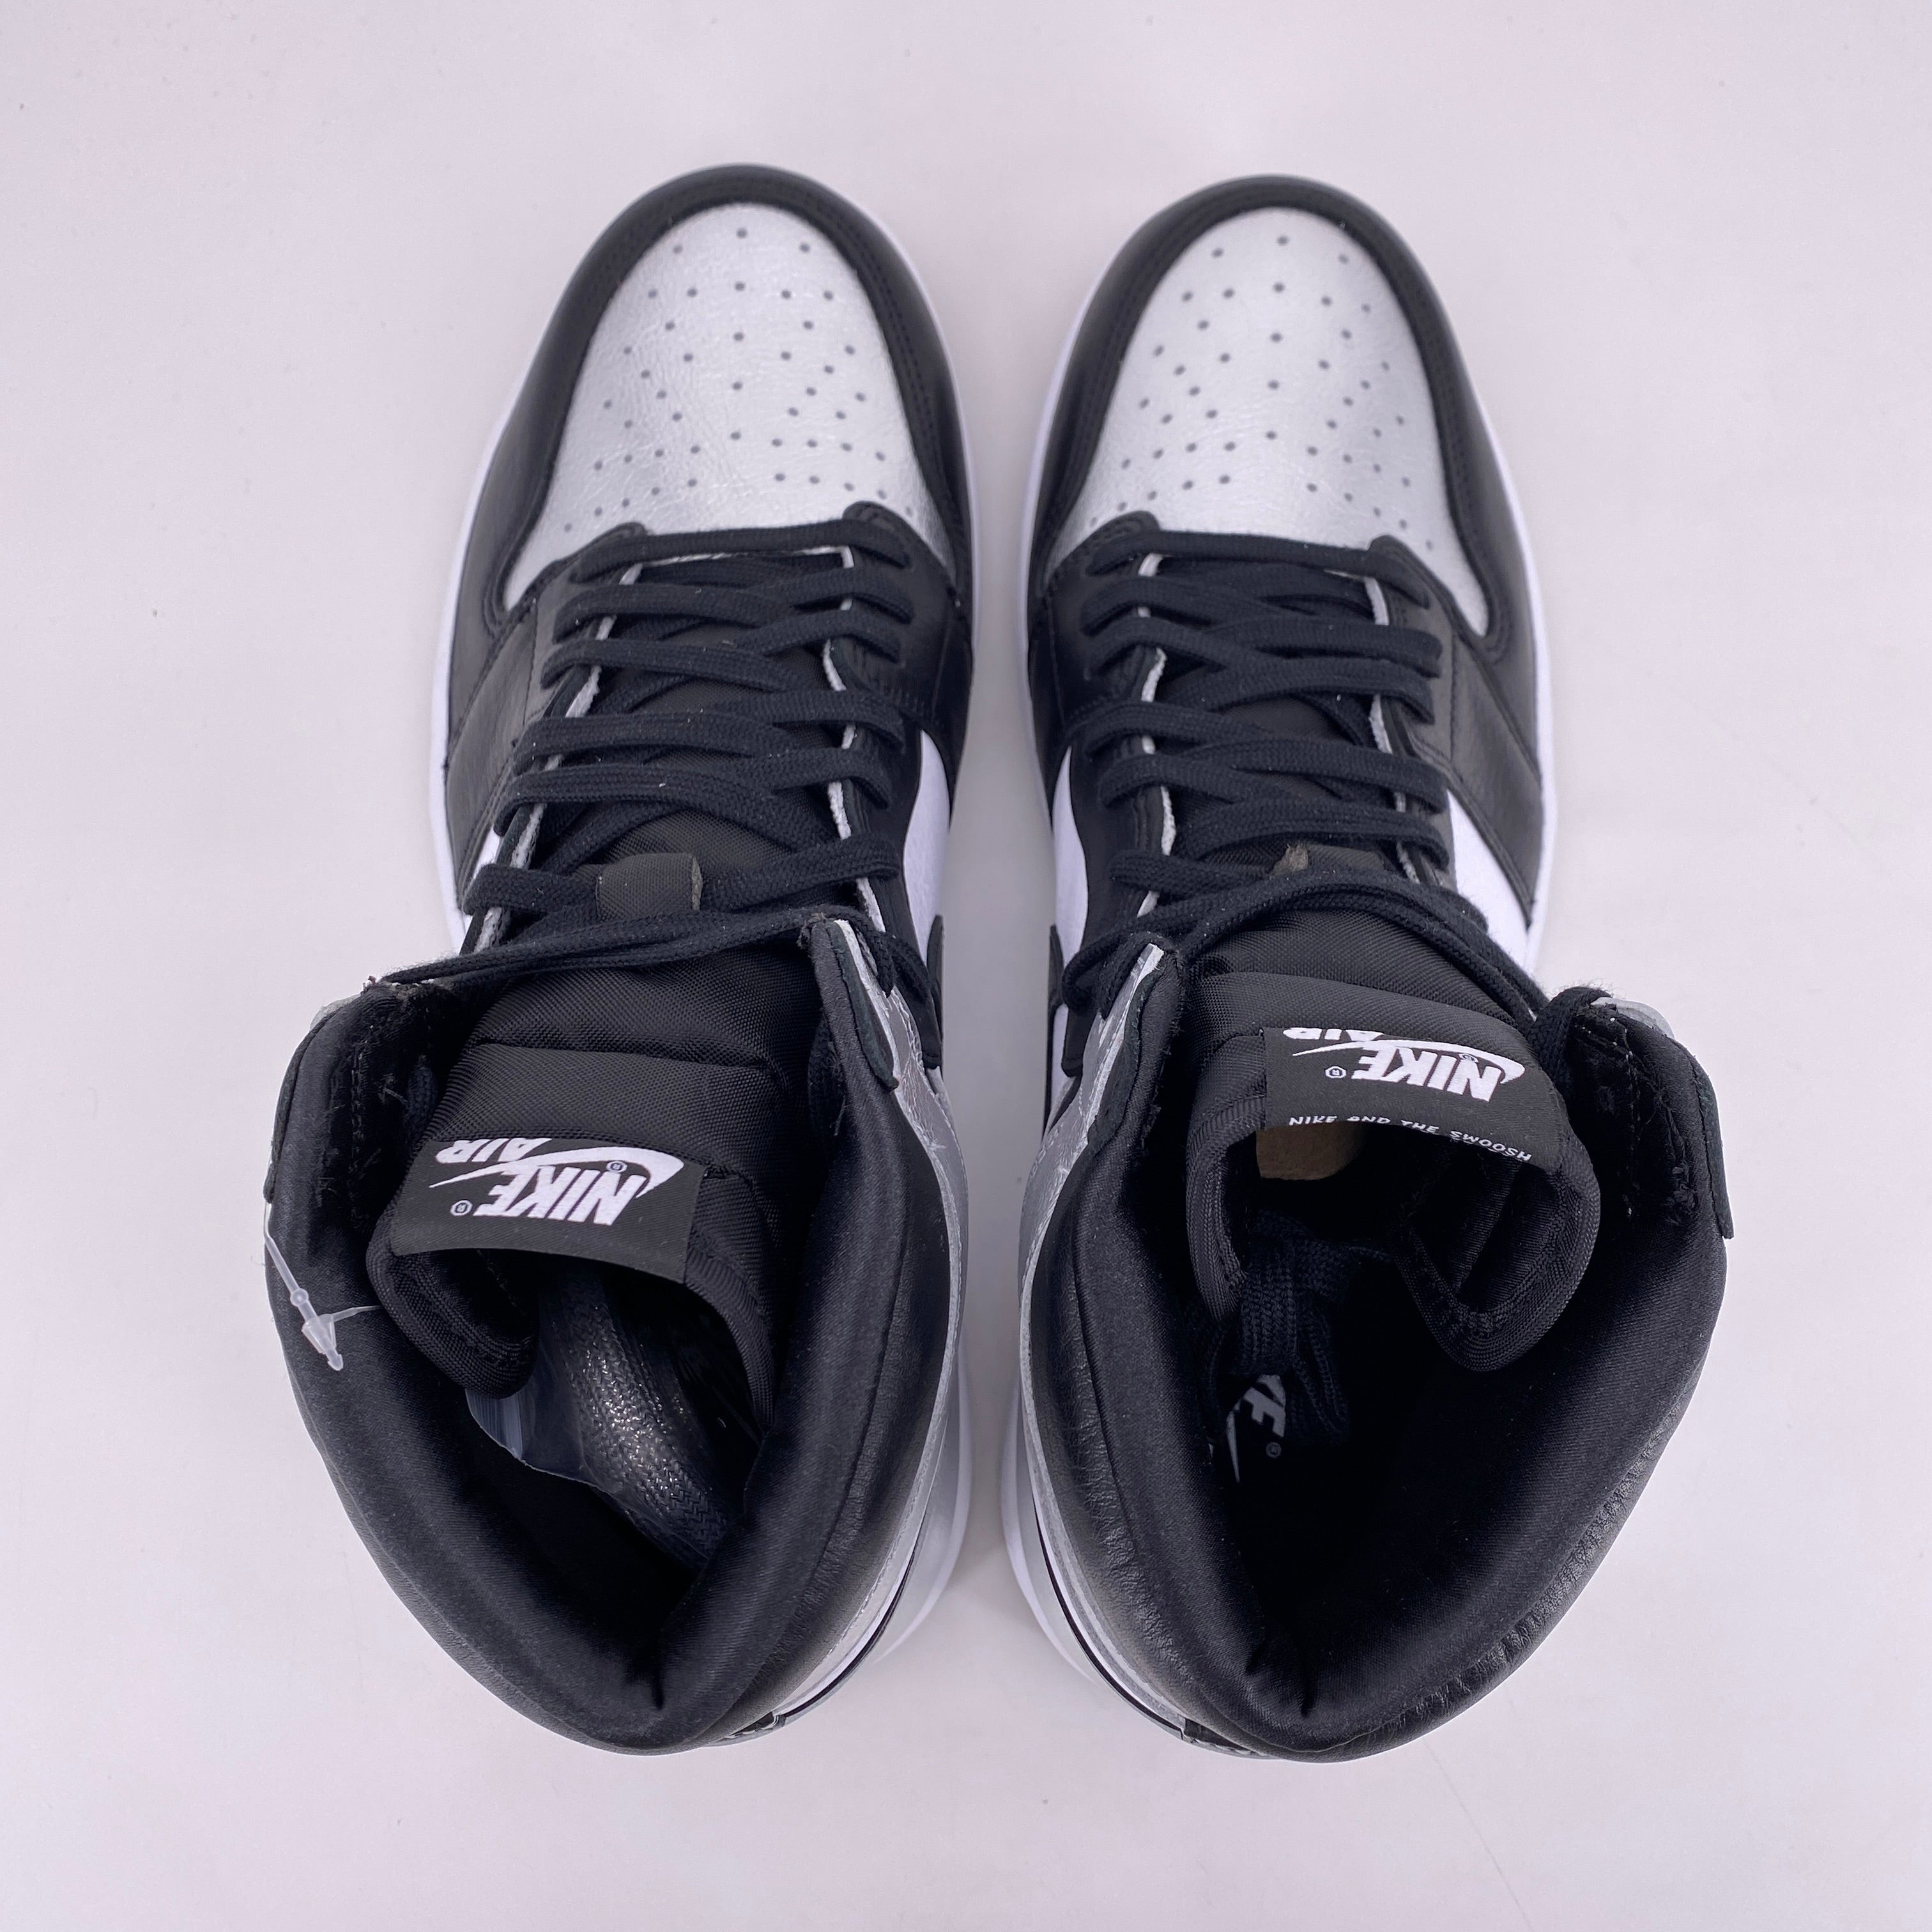 Air Jordan (W) 1 Retro High OG "Silver Toe" 2021 New Size 11.5W